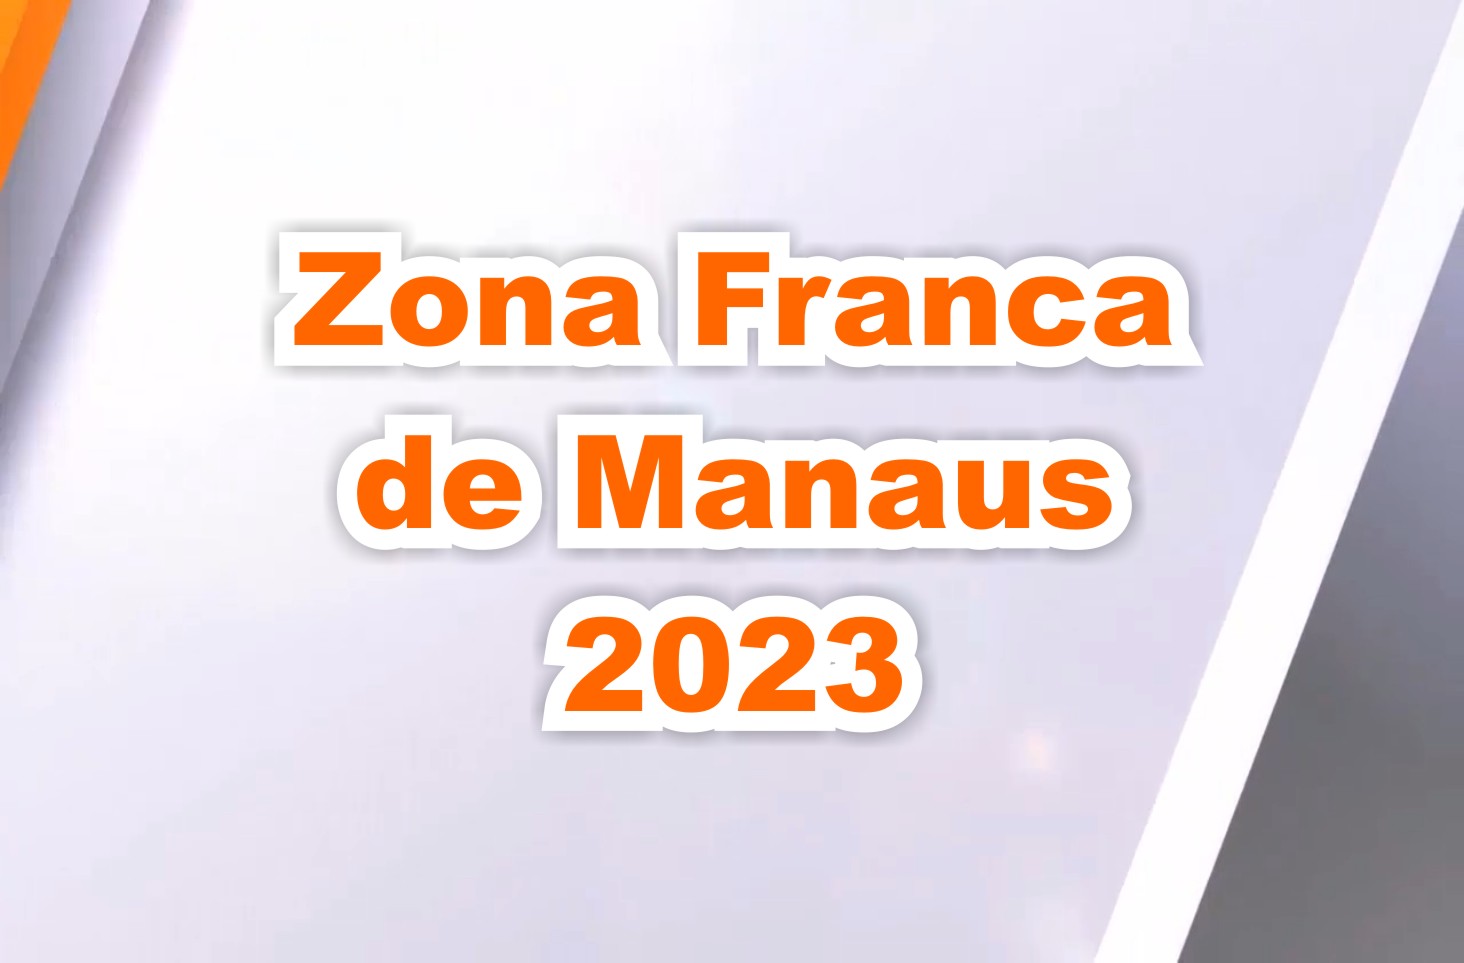 Zona Franca de Manaus 2023